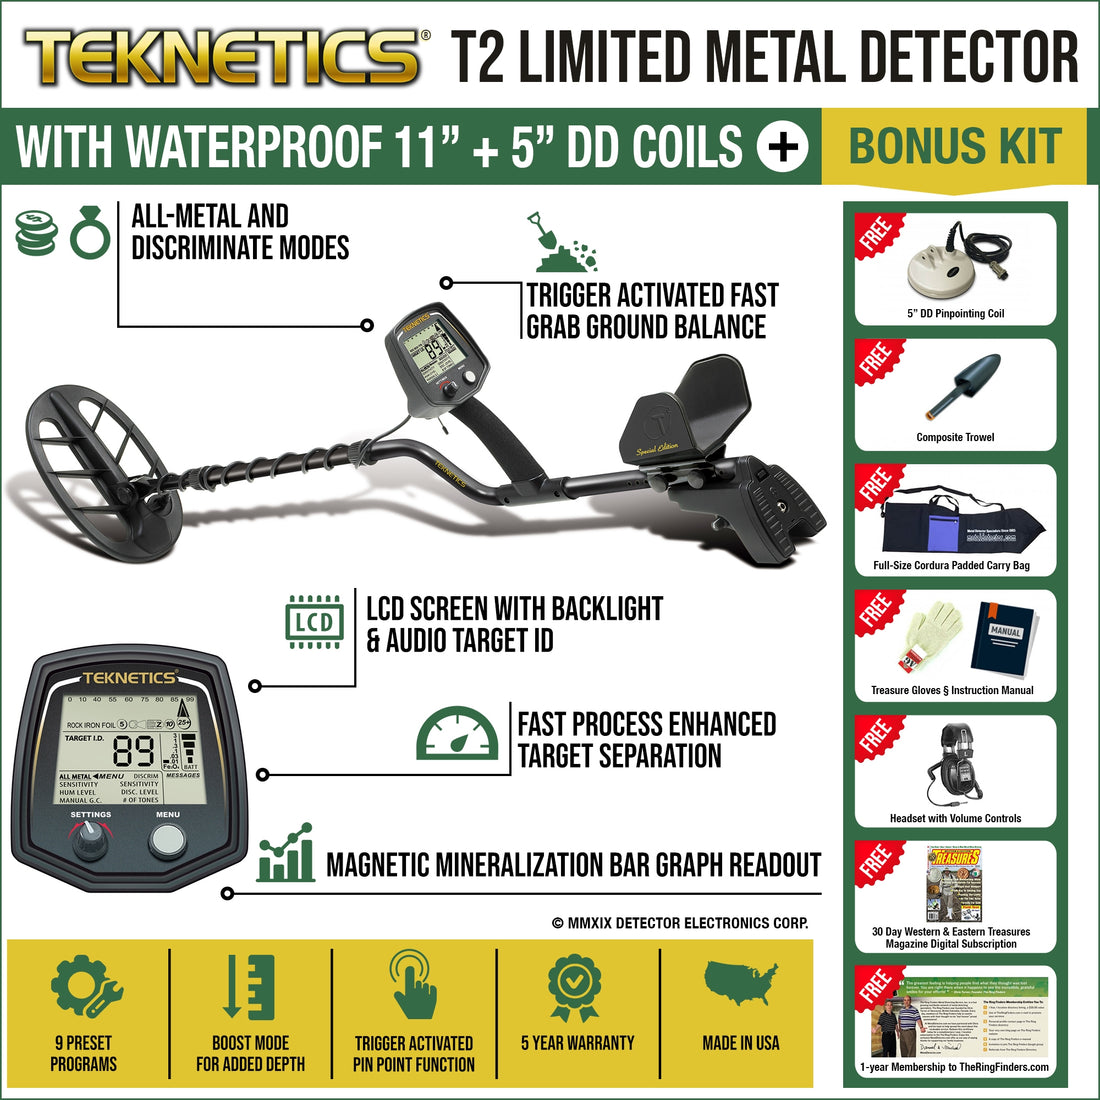 Teknetics T2 Limited Edition Metal Detector with Waterproof 11" + 5" DD Coils + Bonus Pack